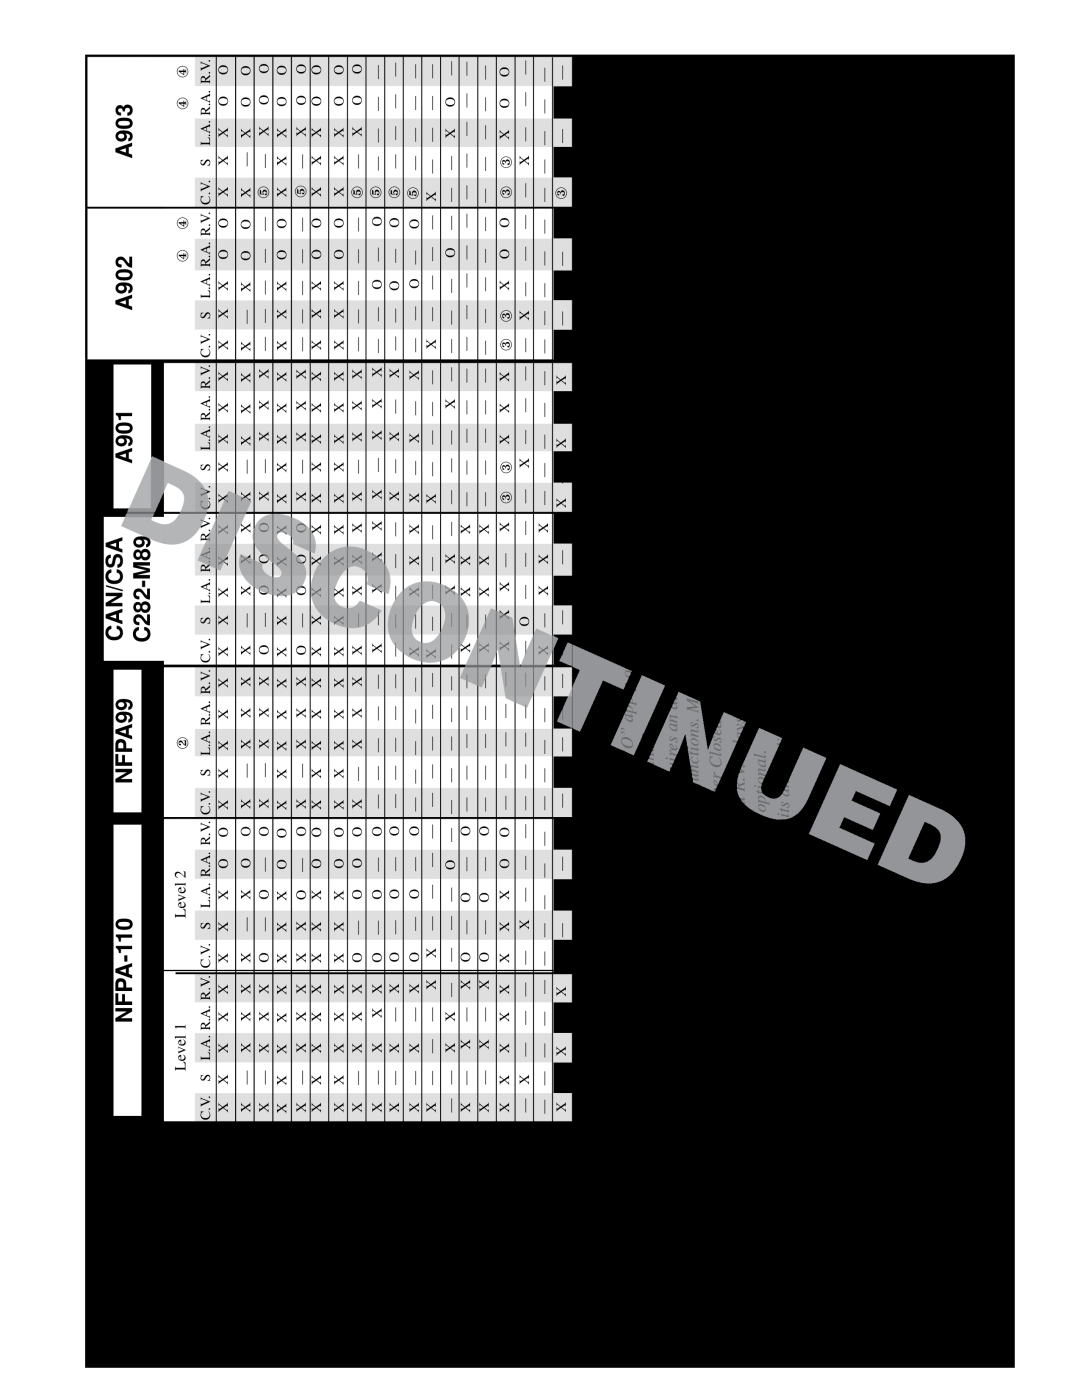 Murphy Series A900 manual NFPA-110, NFPA99, Can/Csa, A901, A902, A903, C282-M89 